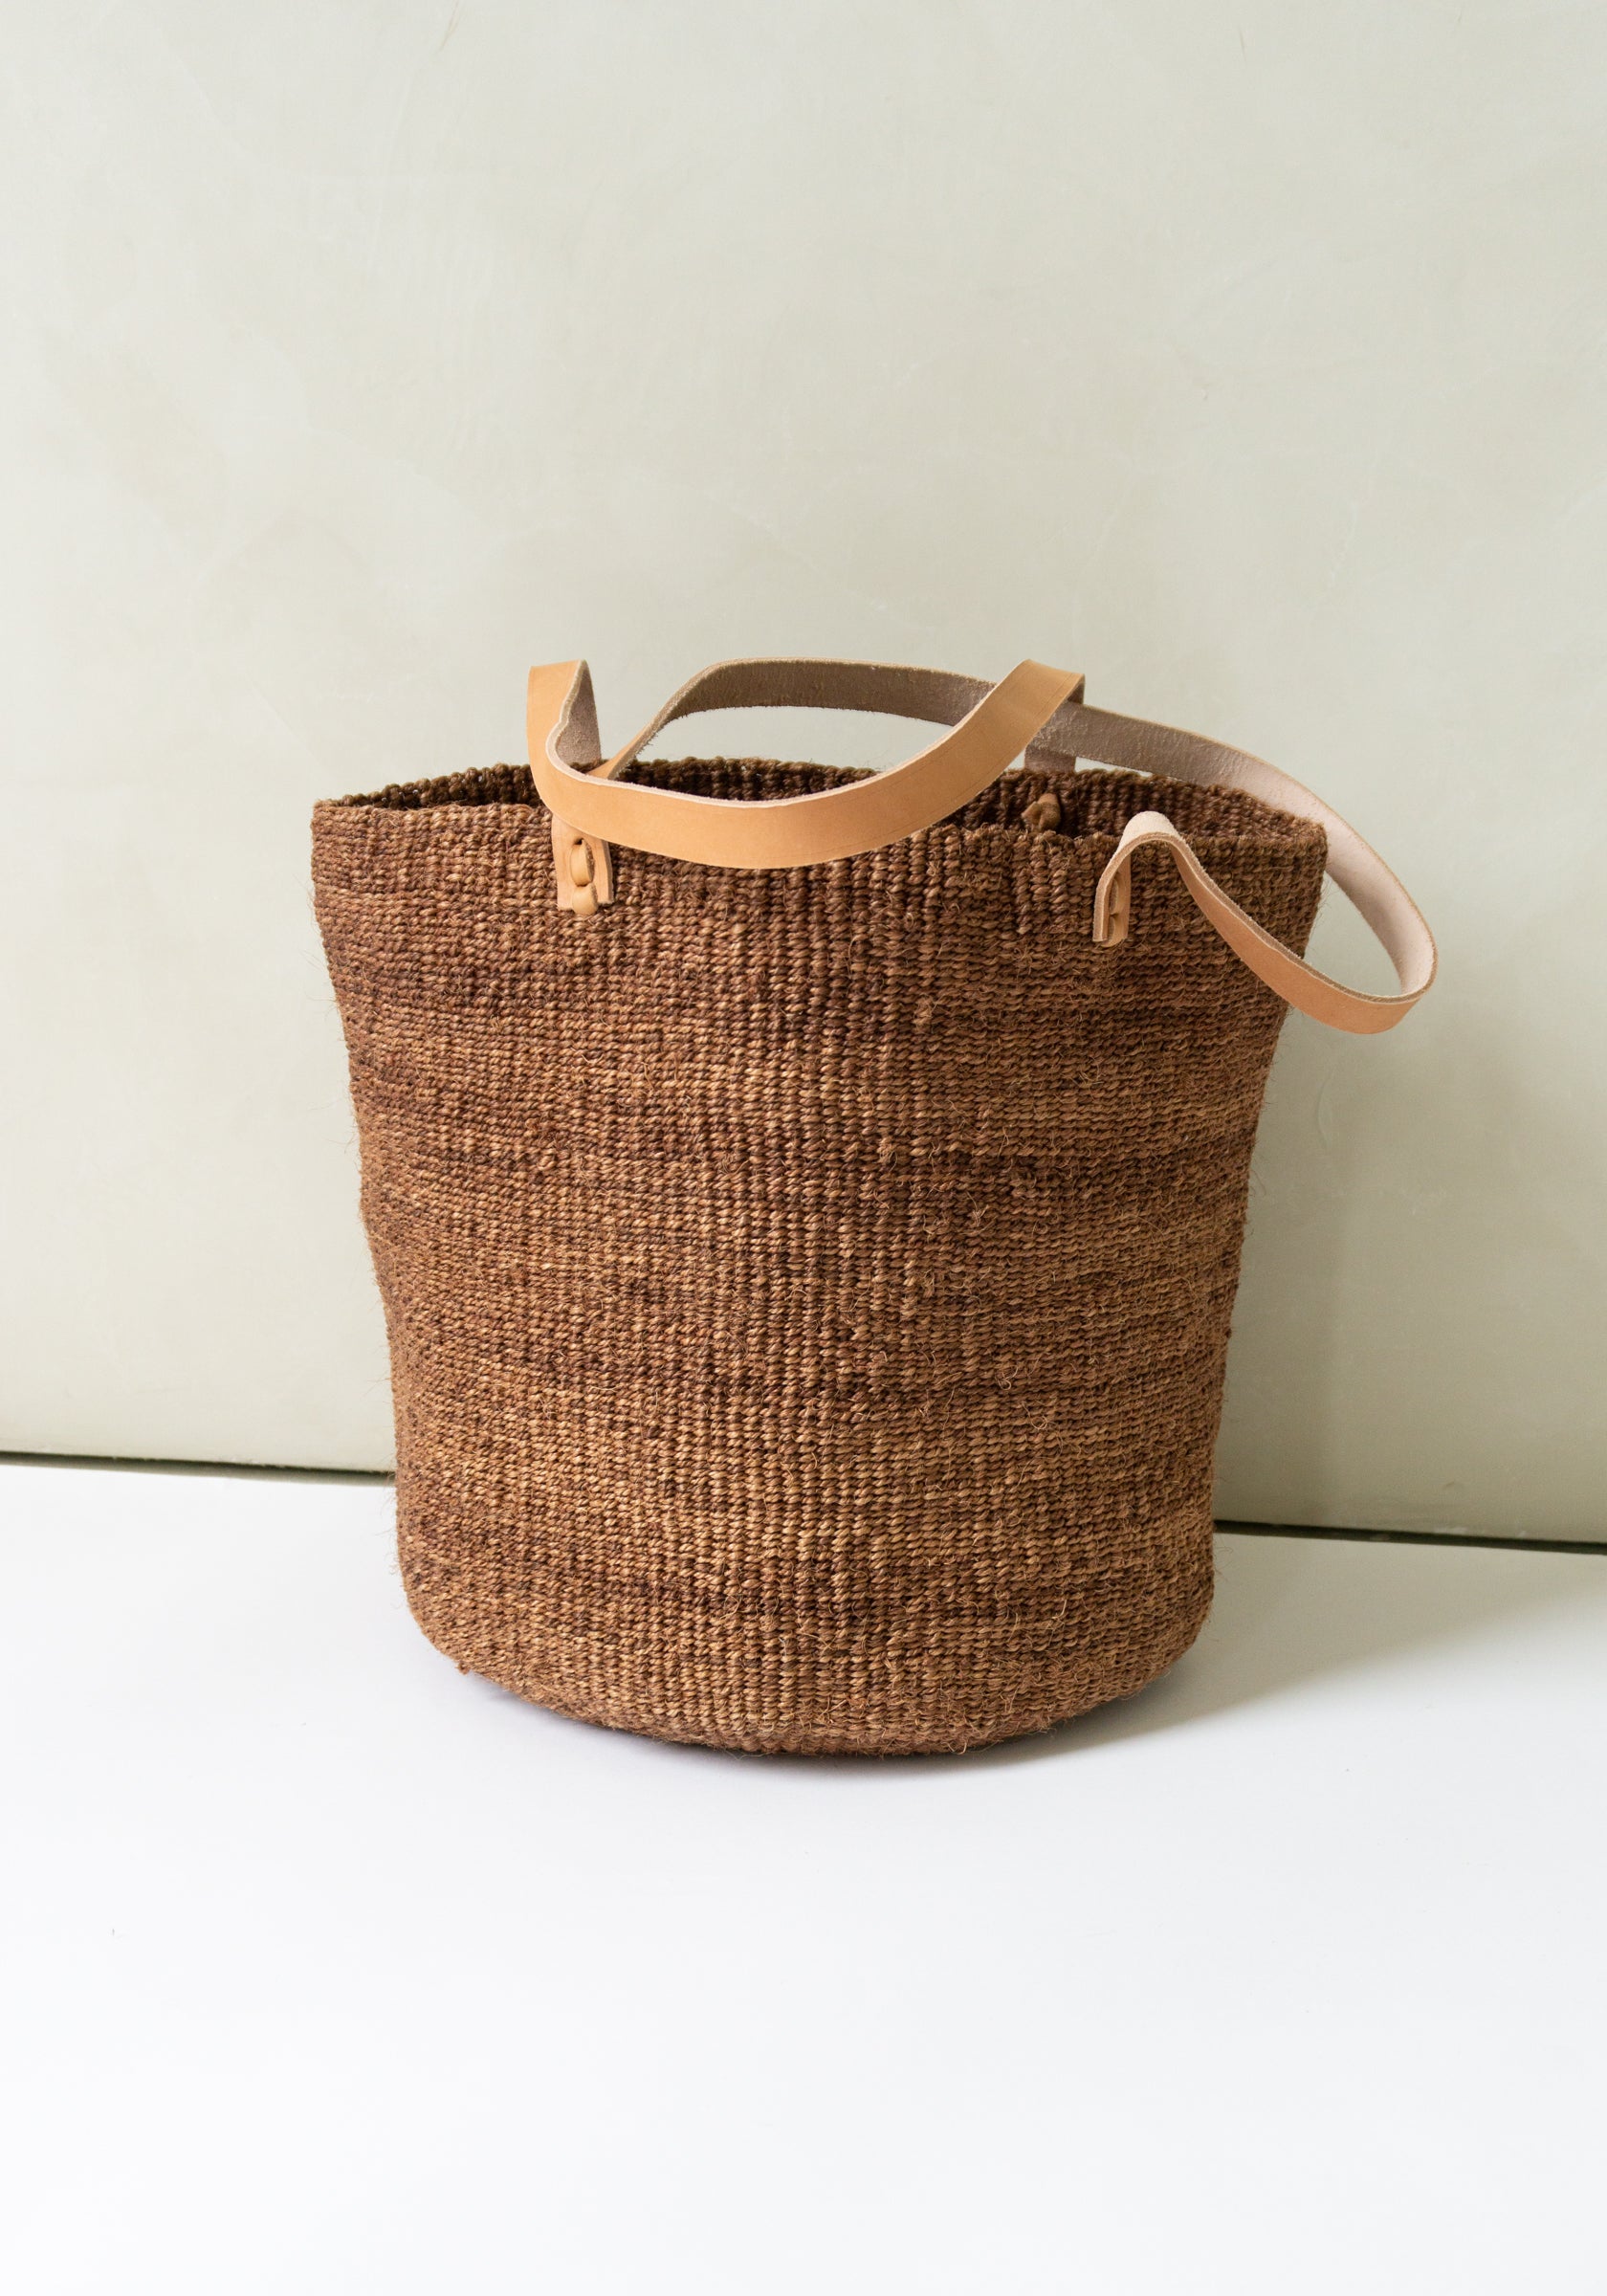 Kiondo Medium Shopper Basket in Dark Brown